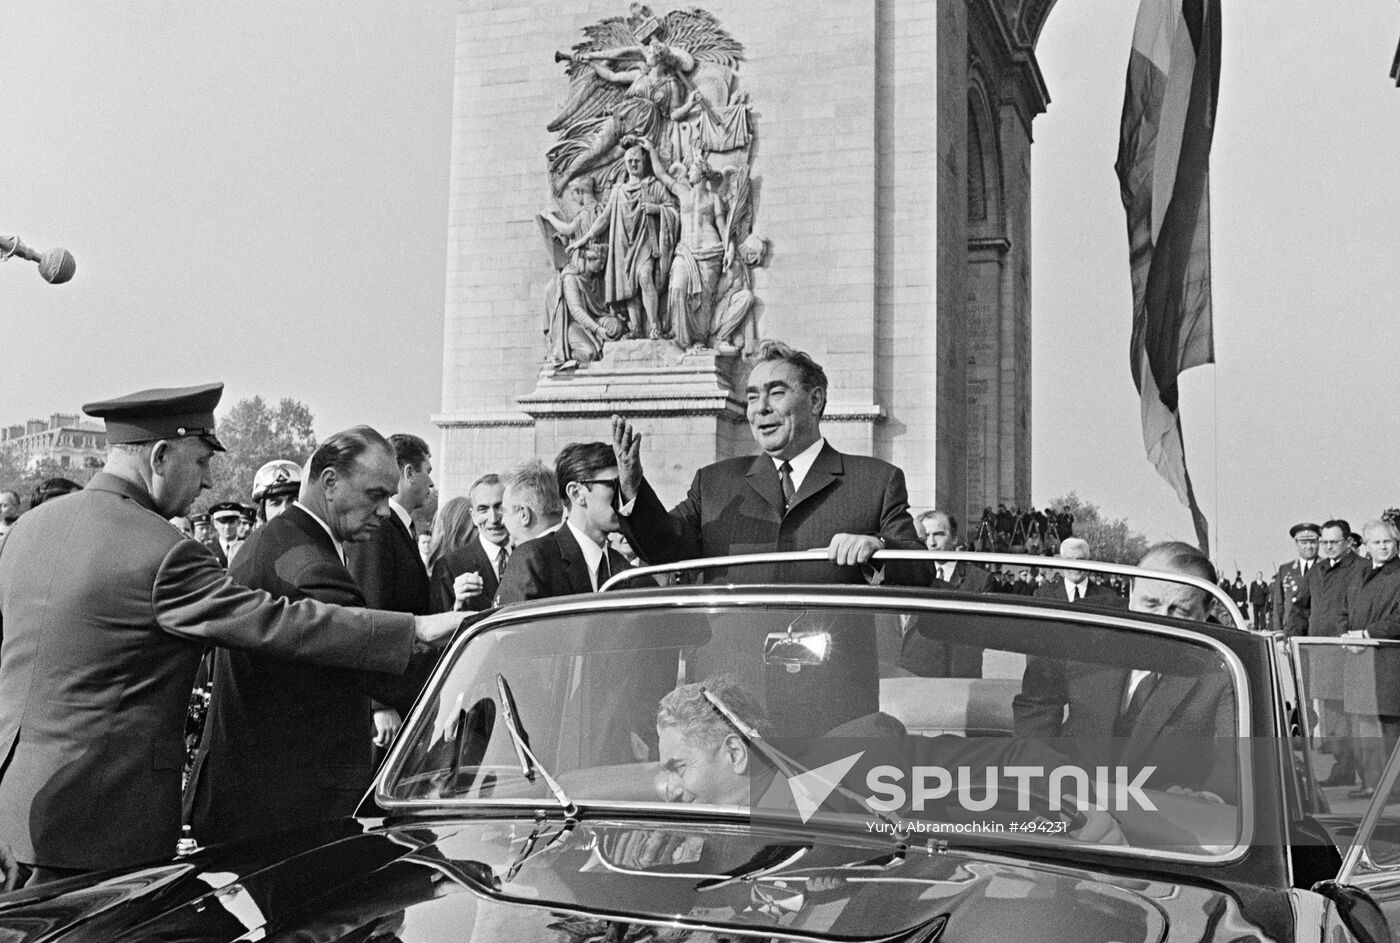 Soviet leader Leonid Brezhnev visits Paris